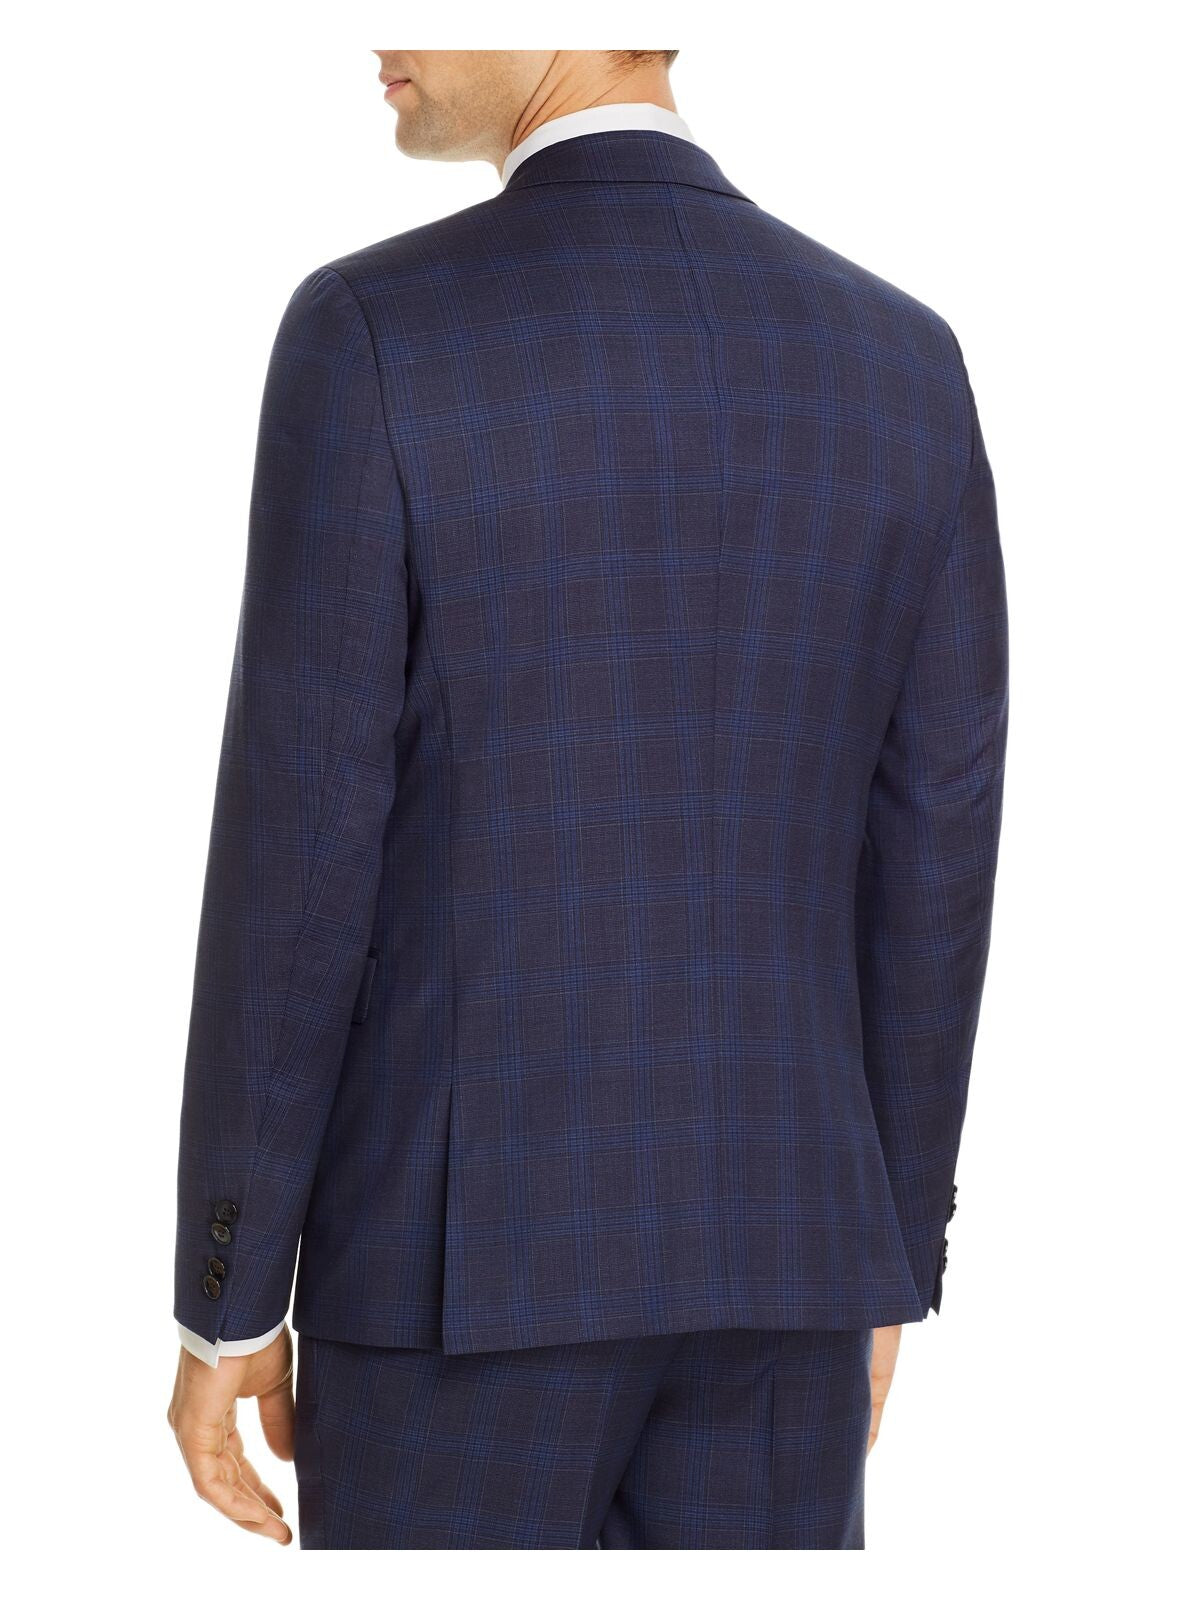 HUGO BOSS Mens Navy Check Extra Slim Fit Suit Separate Blazer Jacket 44R